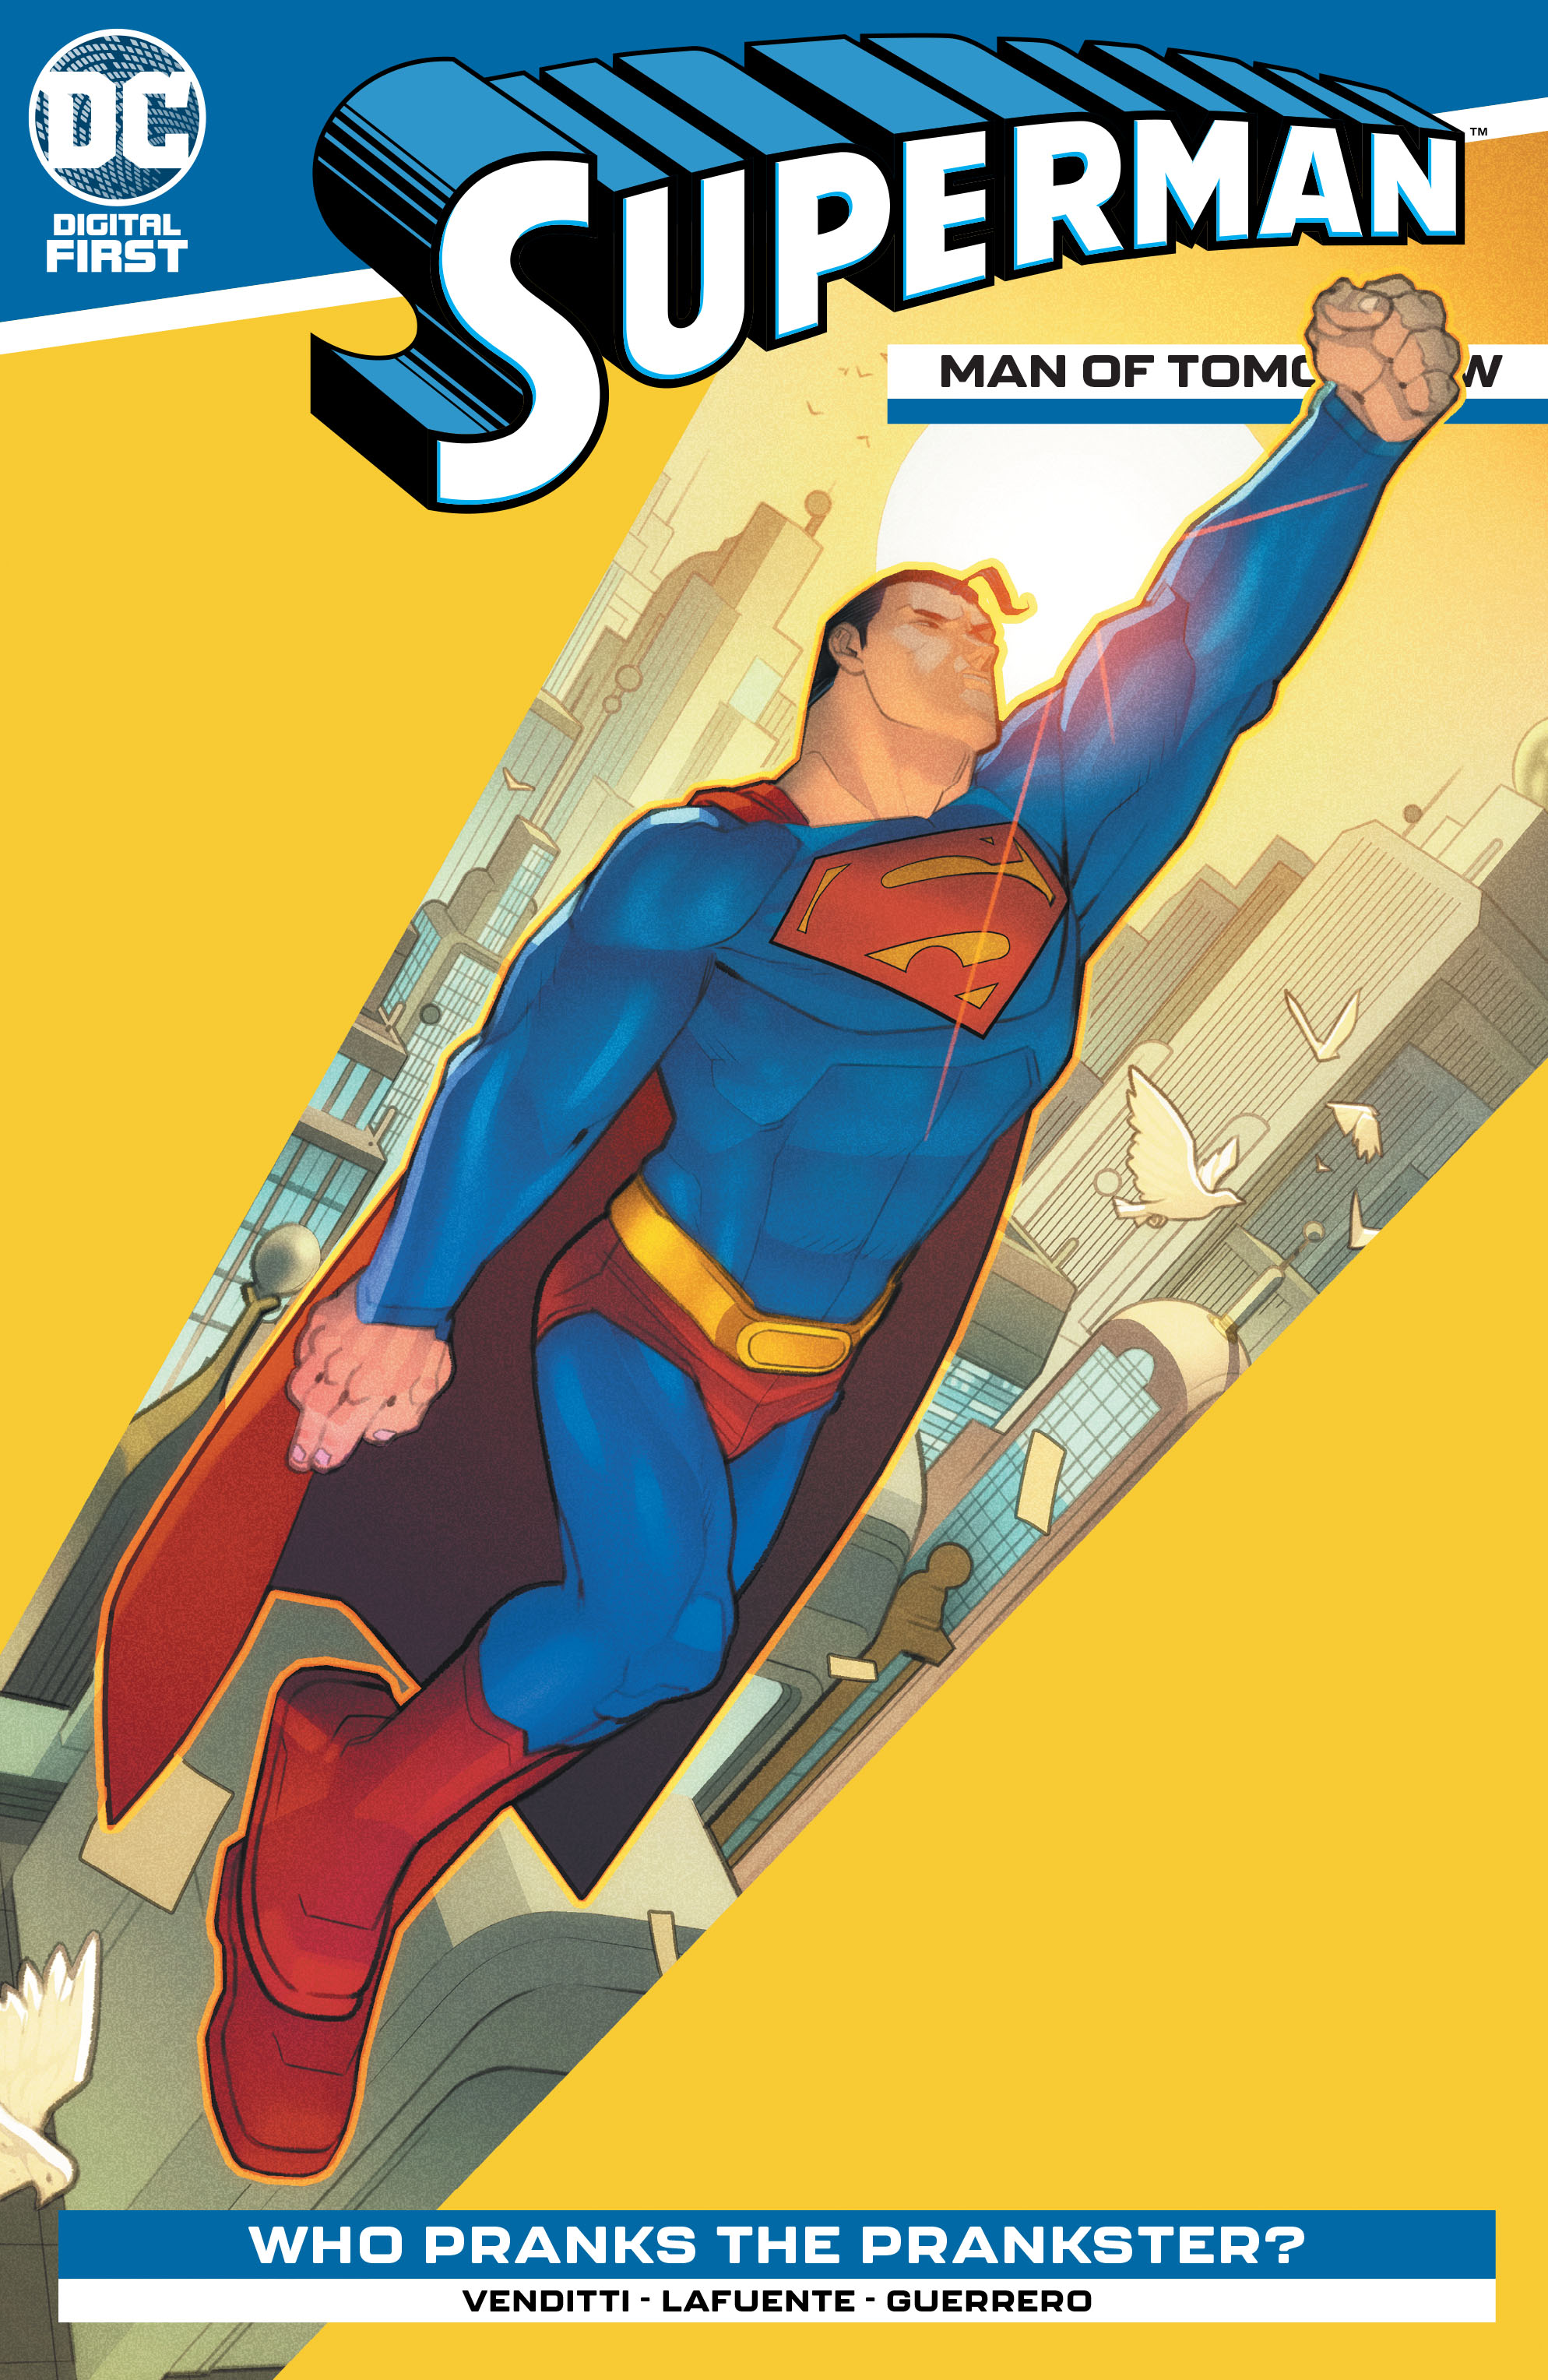 Superman: Man of Tomorrow #13 review